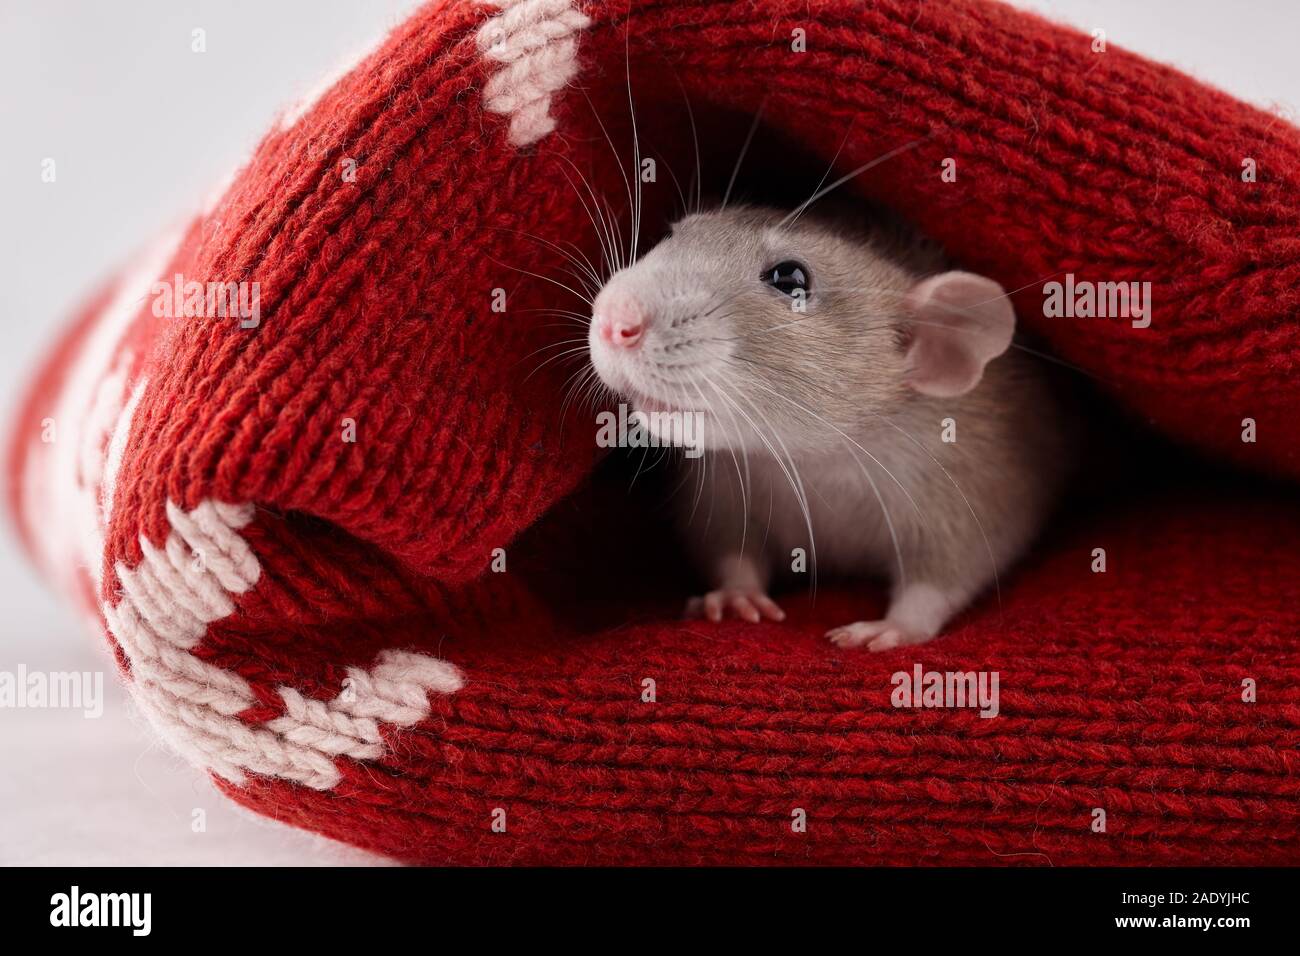 Rat hiding in Christmas winter sweater. New Year 2020 symbol. Stock Photo